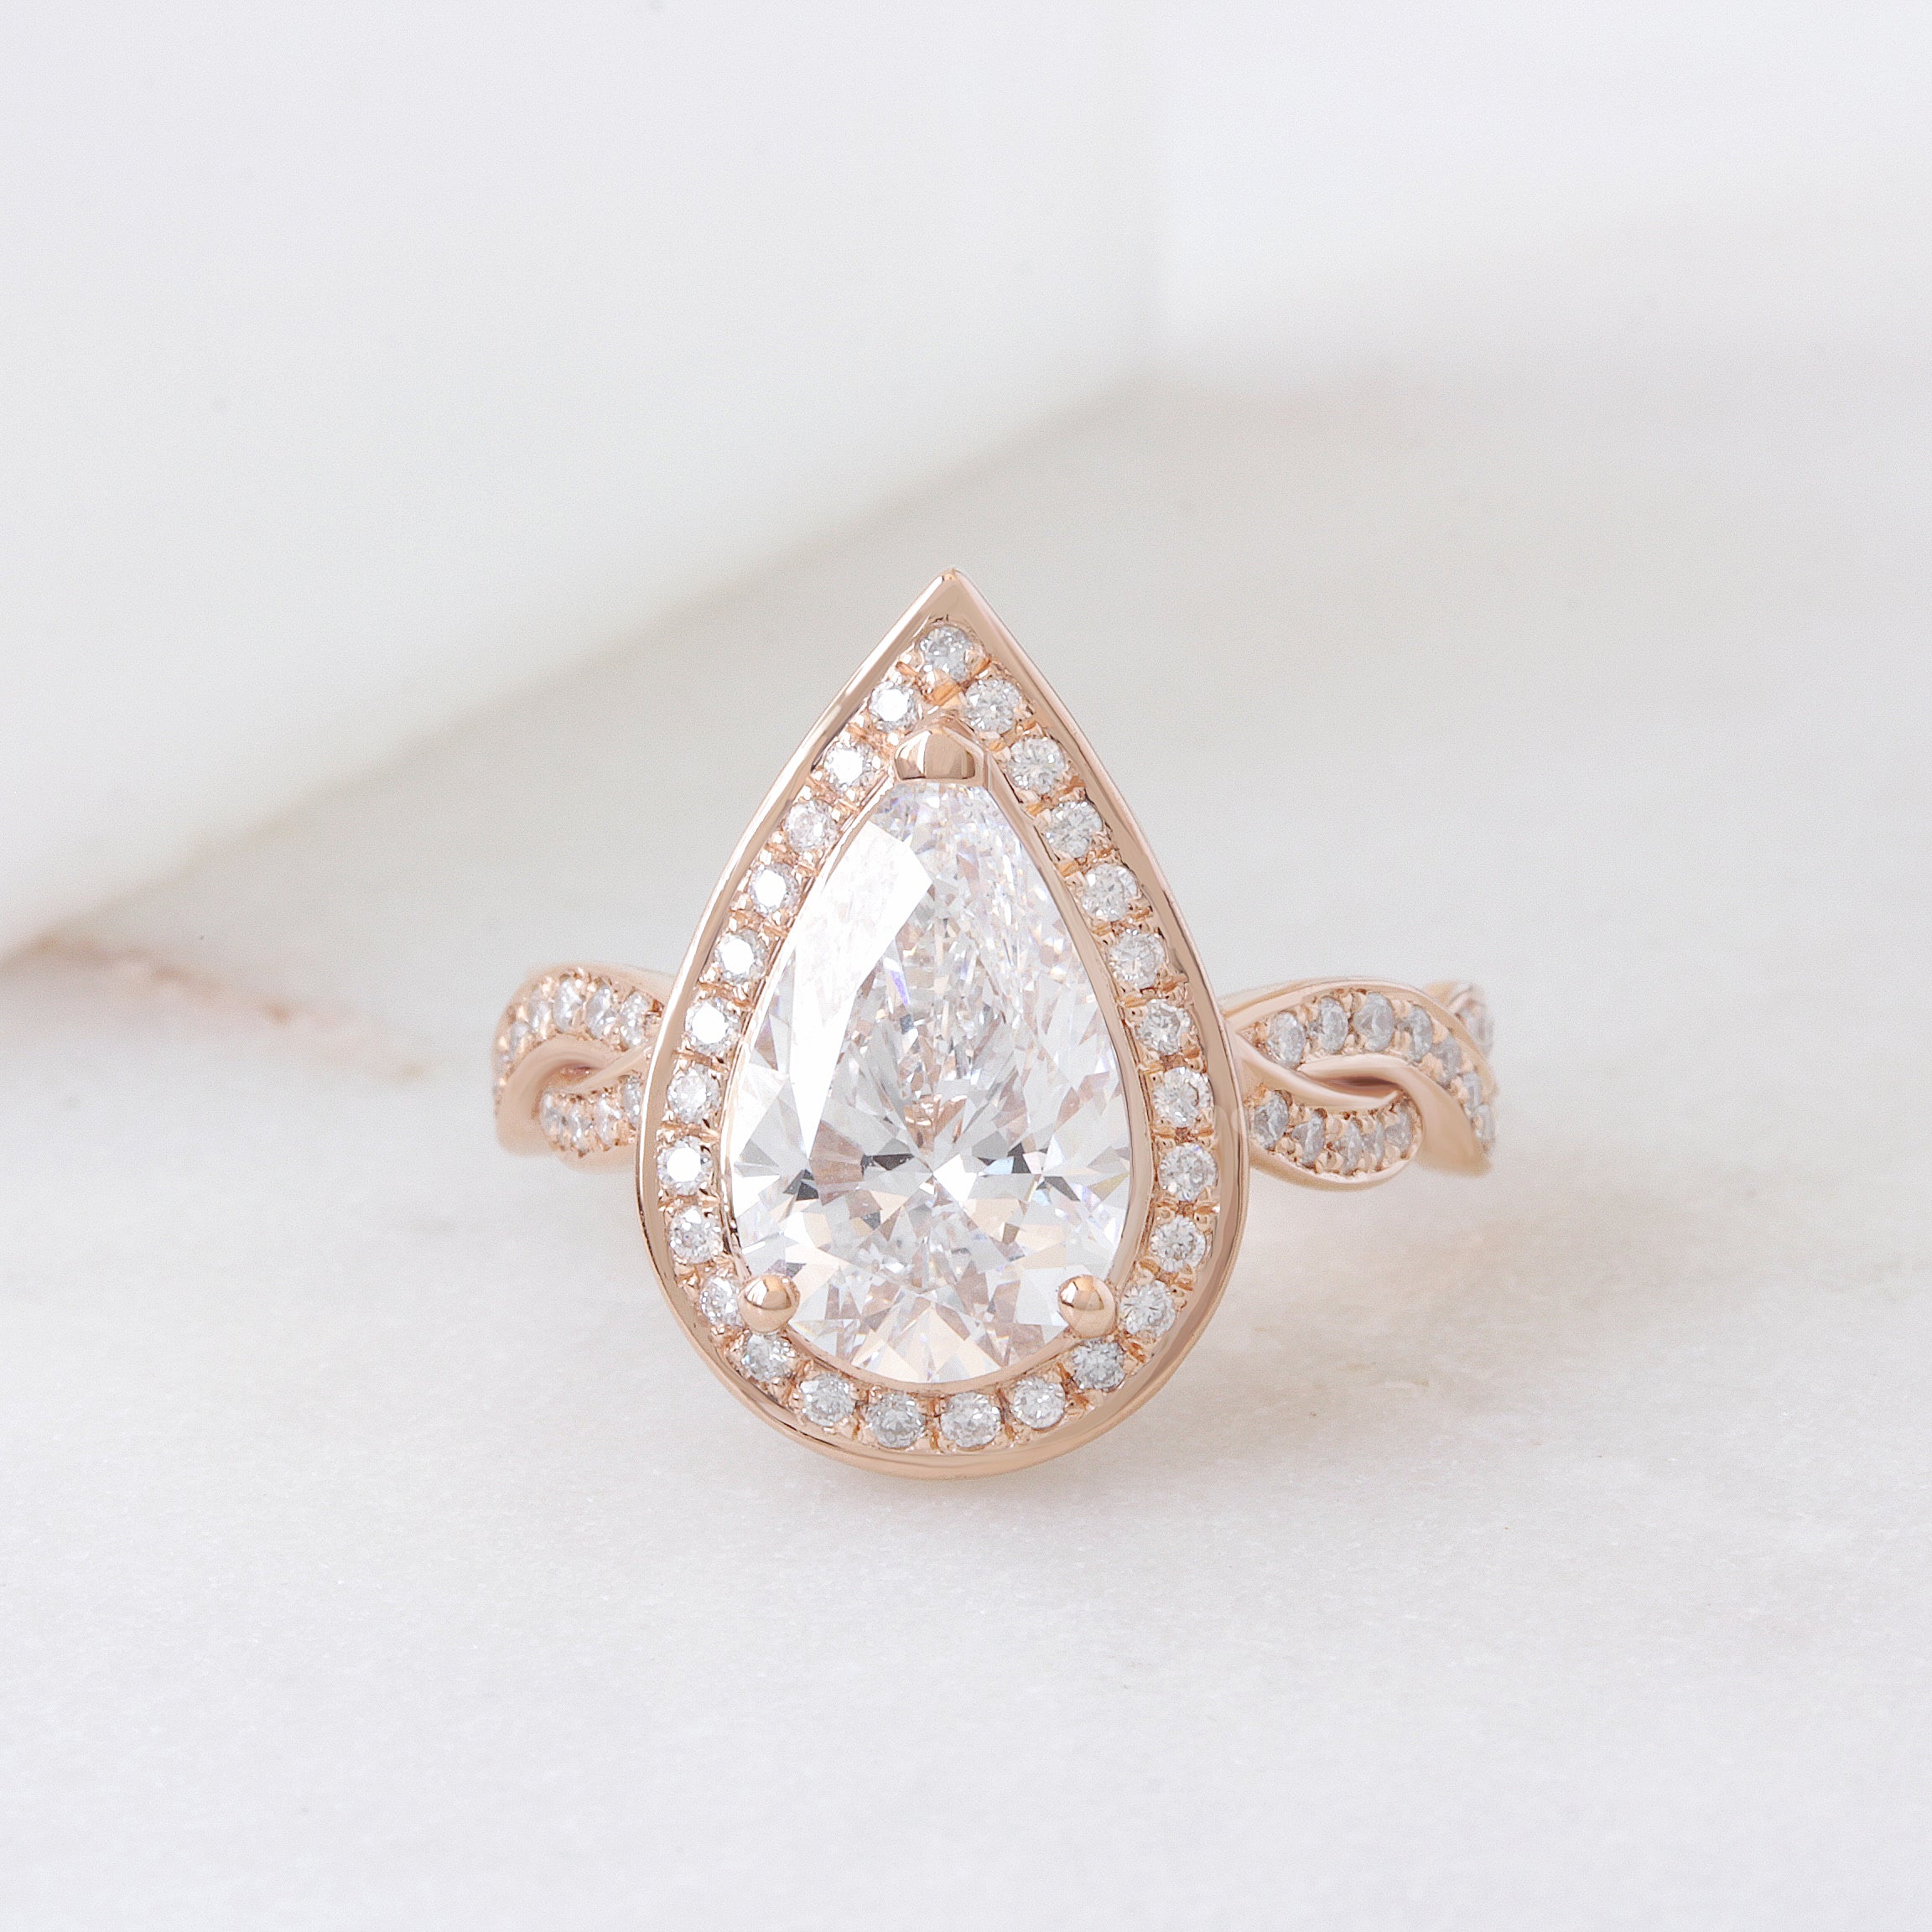 2 carat Pear diamond engagement ring - "Zeus" ♥